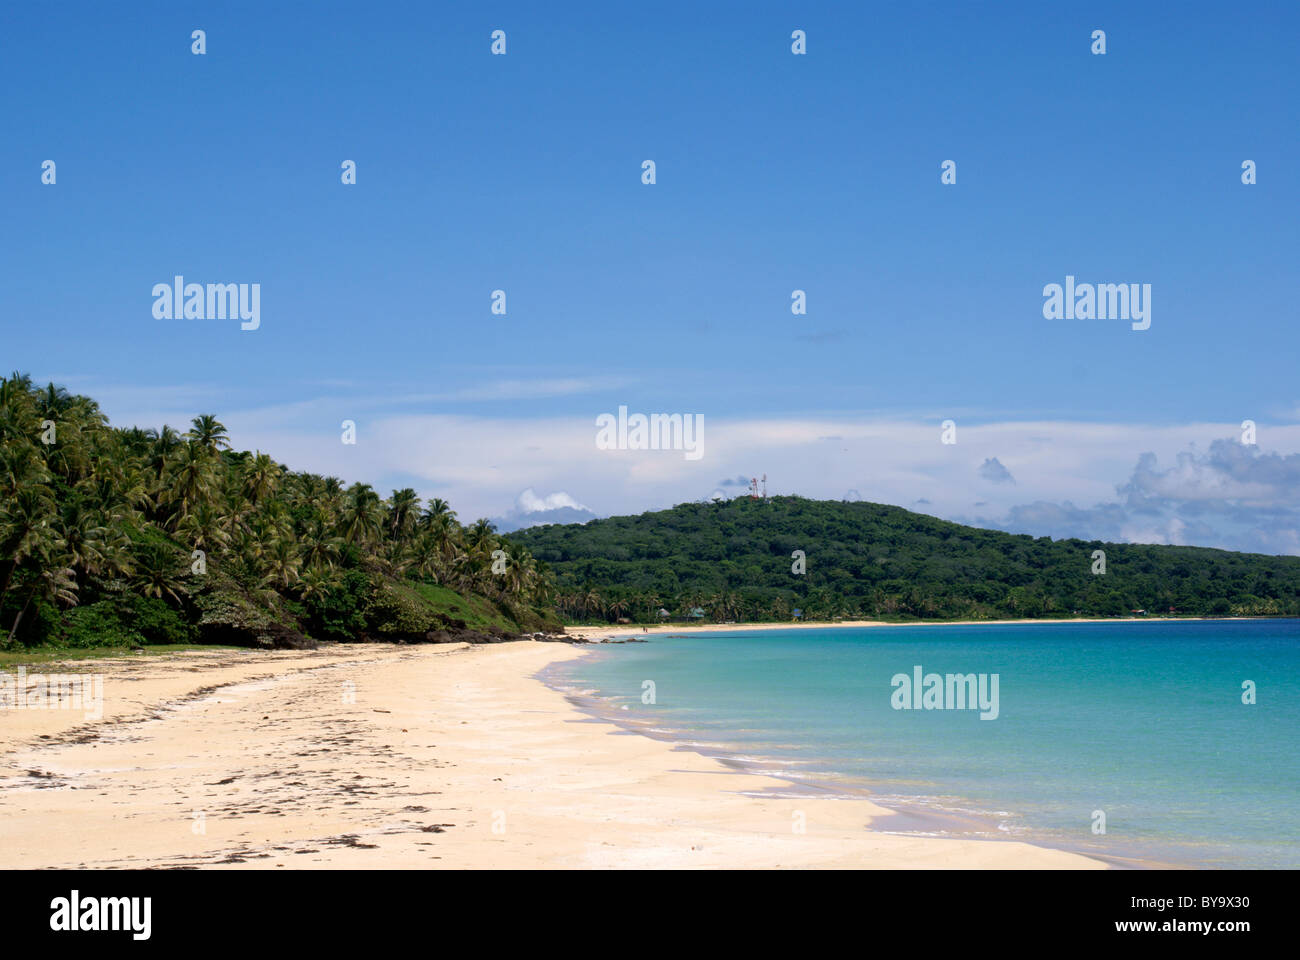 La arena blanca prístina playa caribeña en Big Corn Island o gran Corn Island, Nicaragua, Centroamérica Foto de stock